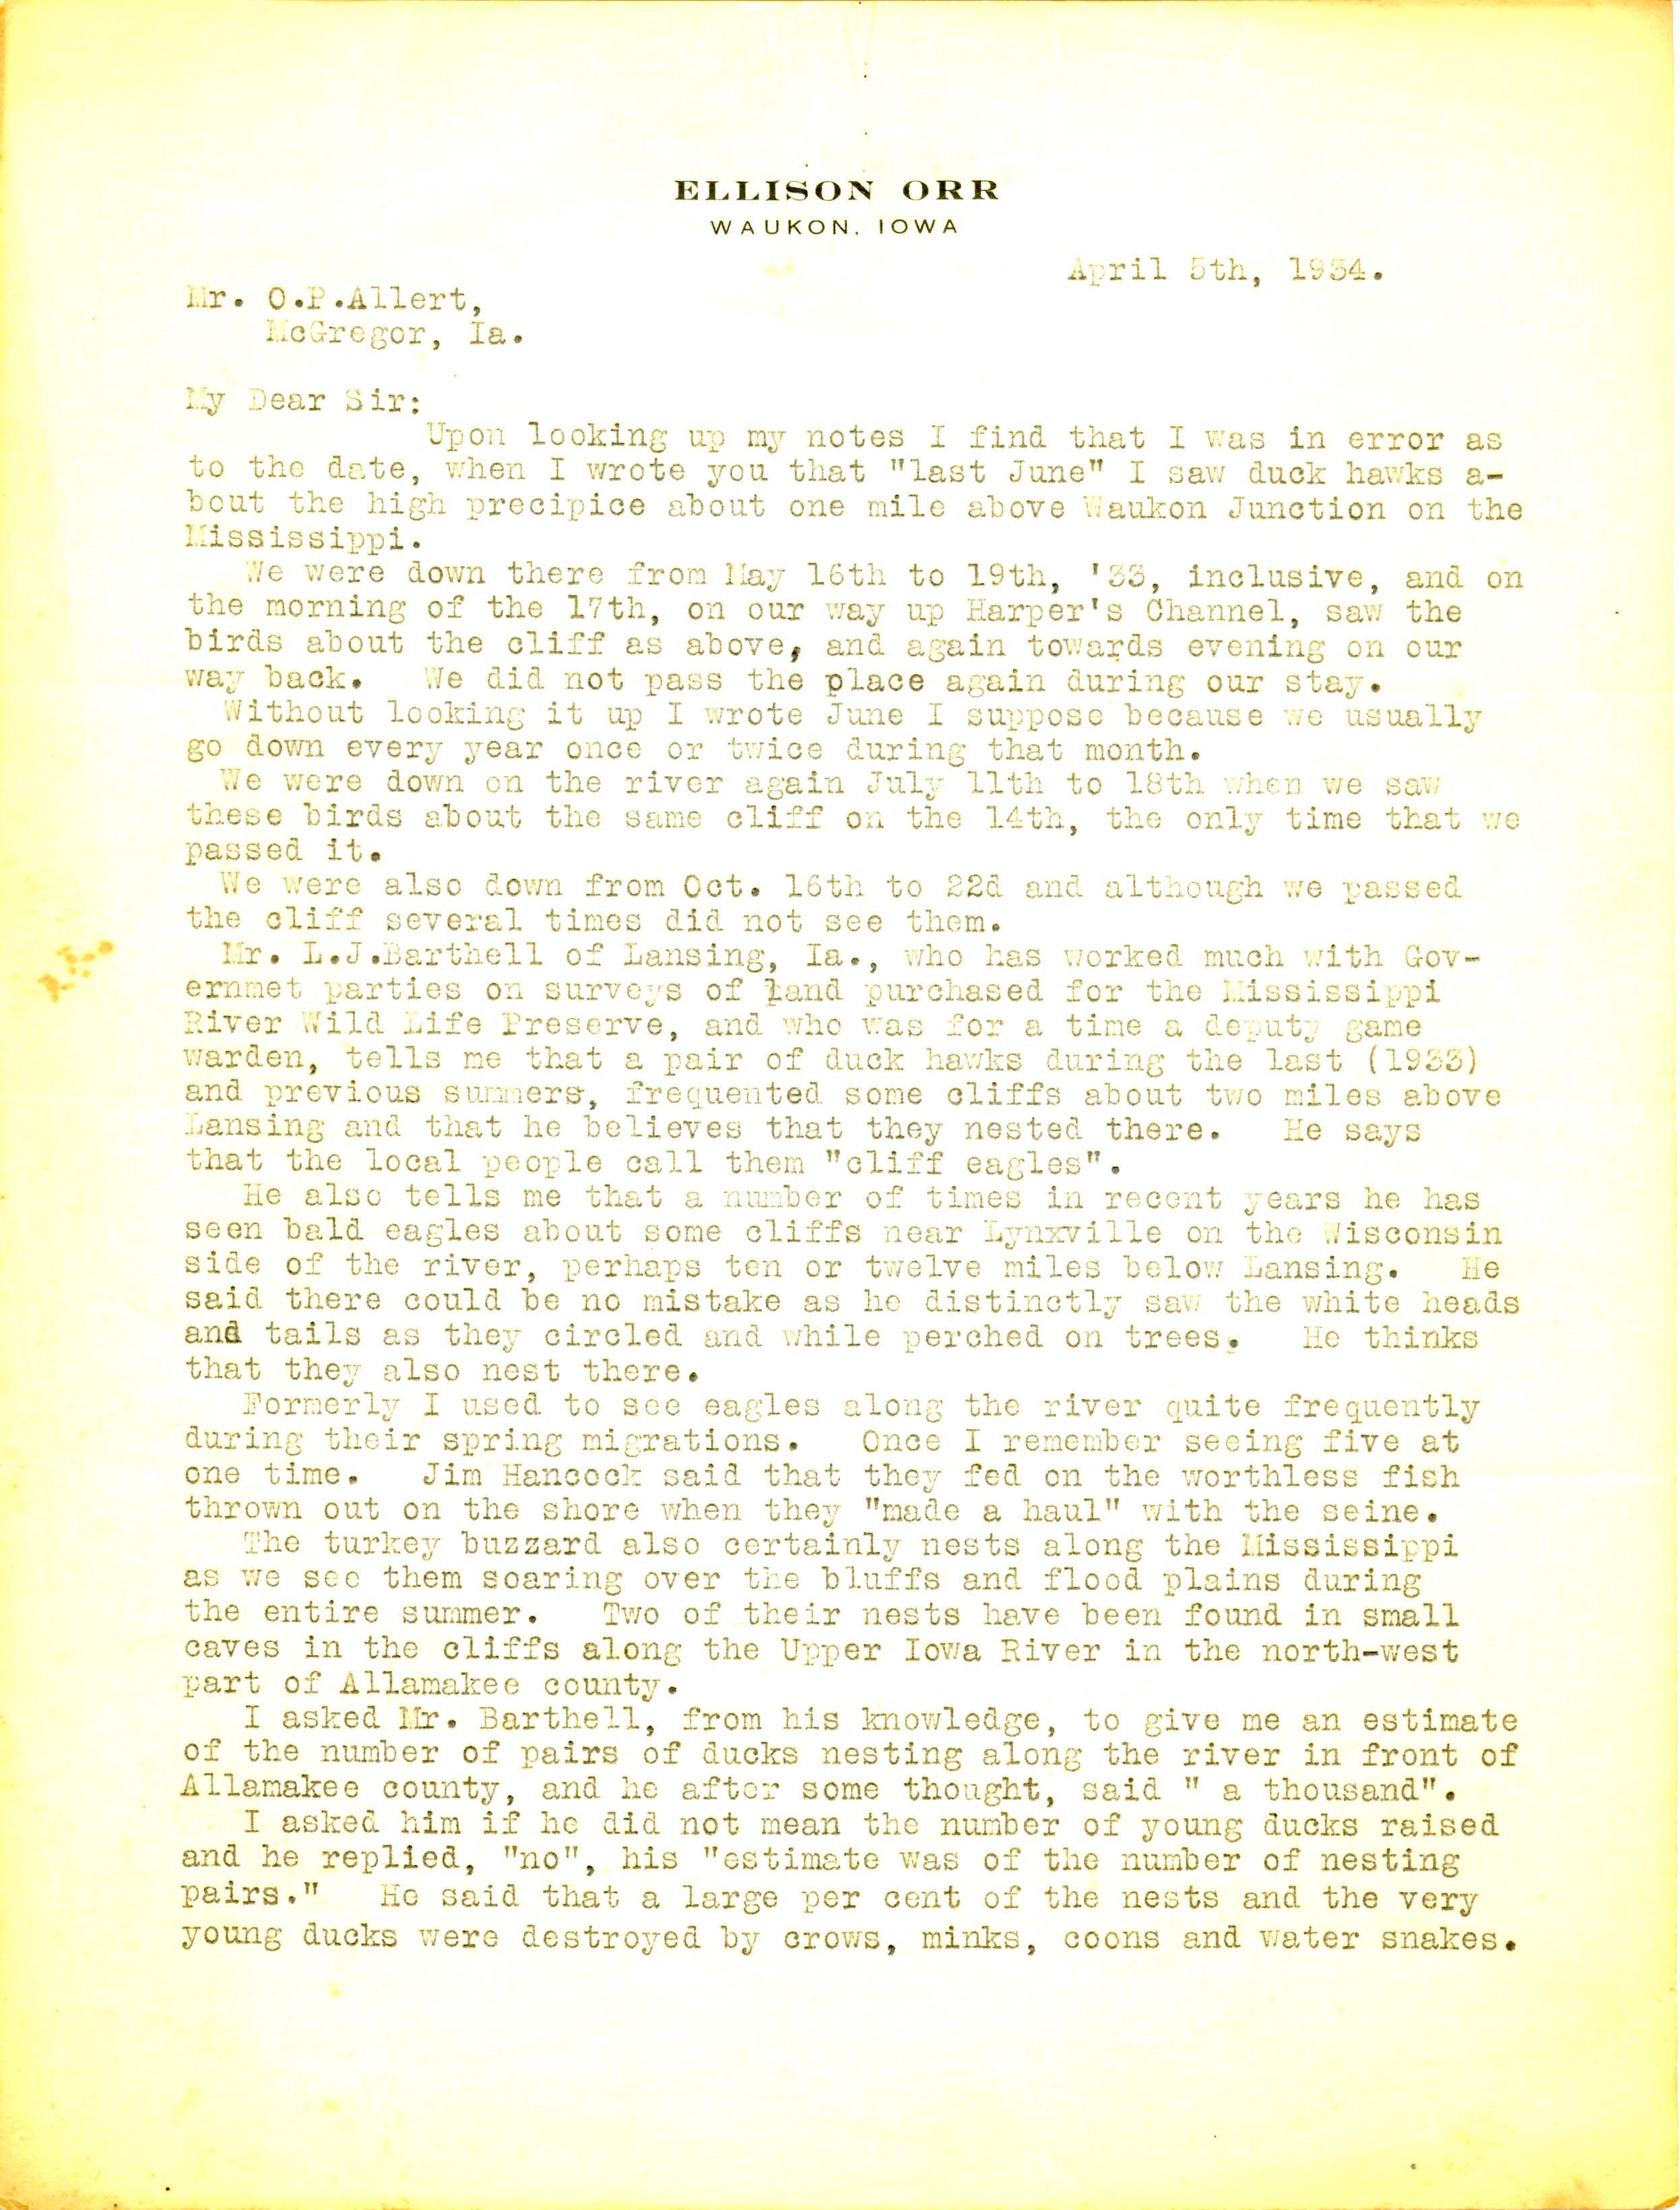 Ellison Orr letter to Oscar Allert regarding Peregrine Falcon sightings, April 5, 1934